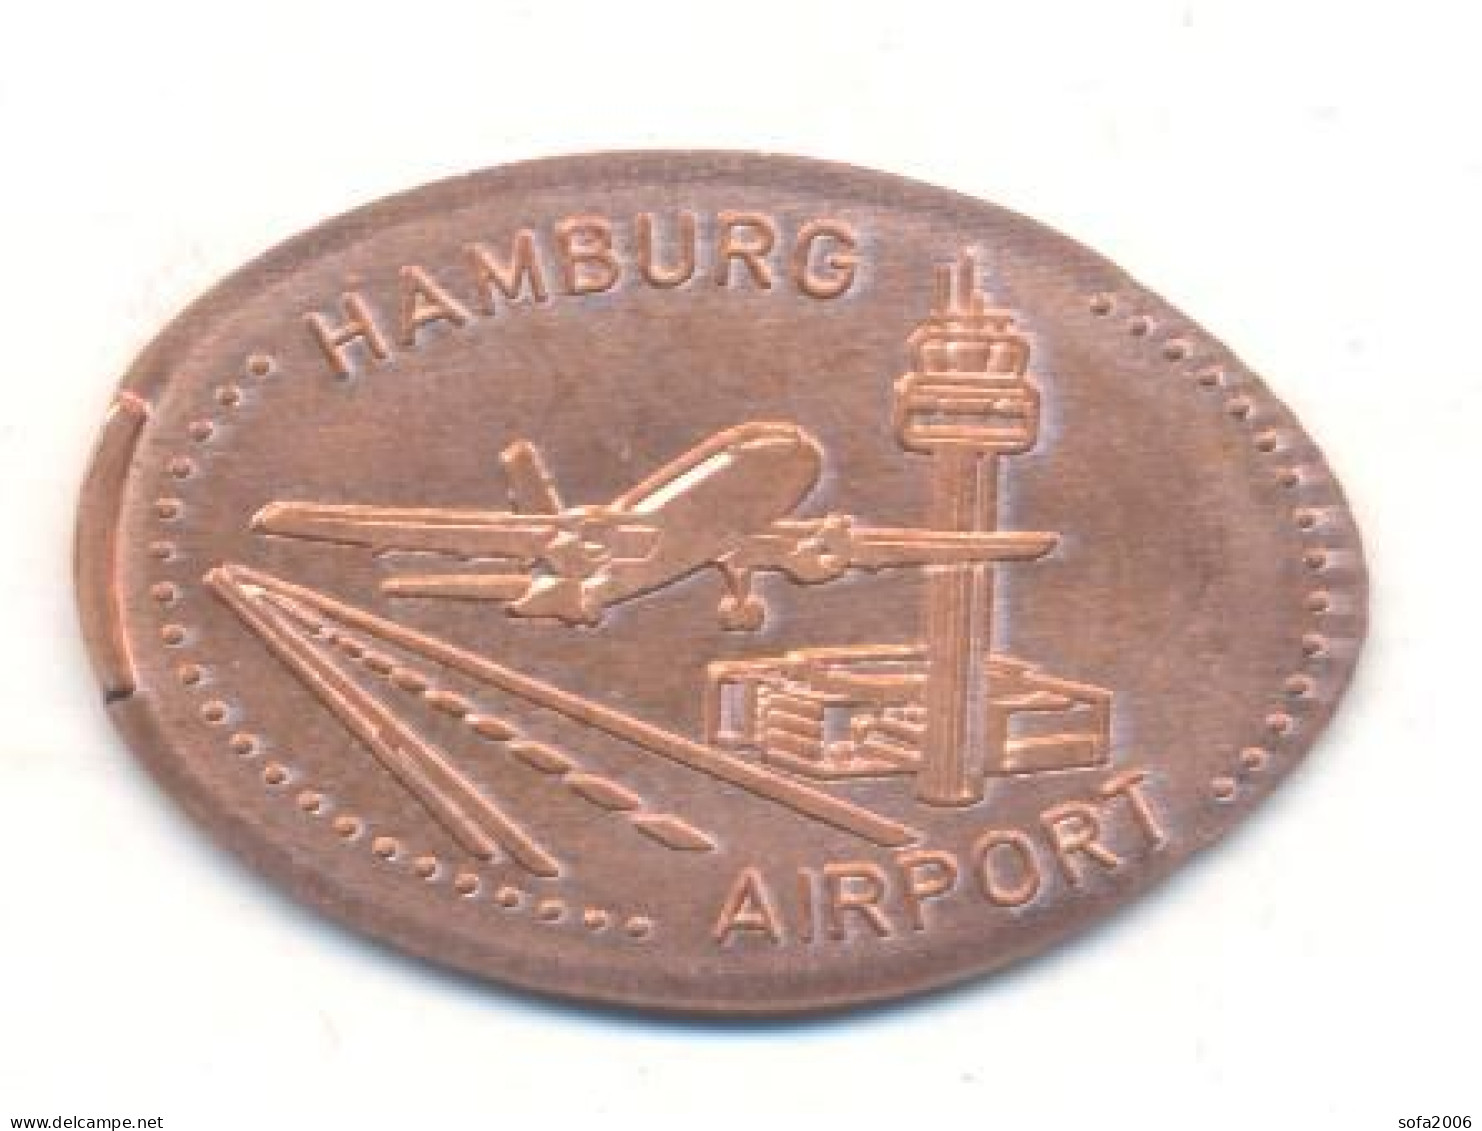 Souvenir Jeton Token Germany-Deutschland Hamburg Airport - Souvenir-Medaille (elongated Coins)